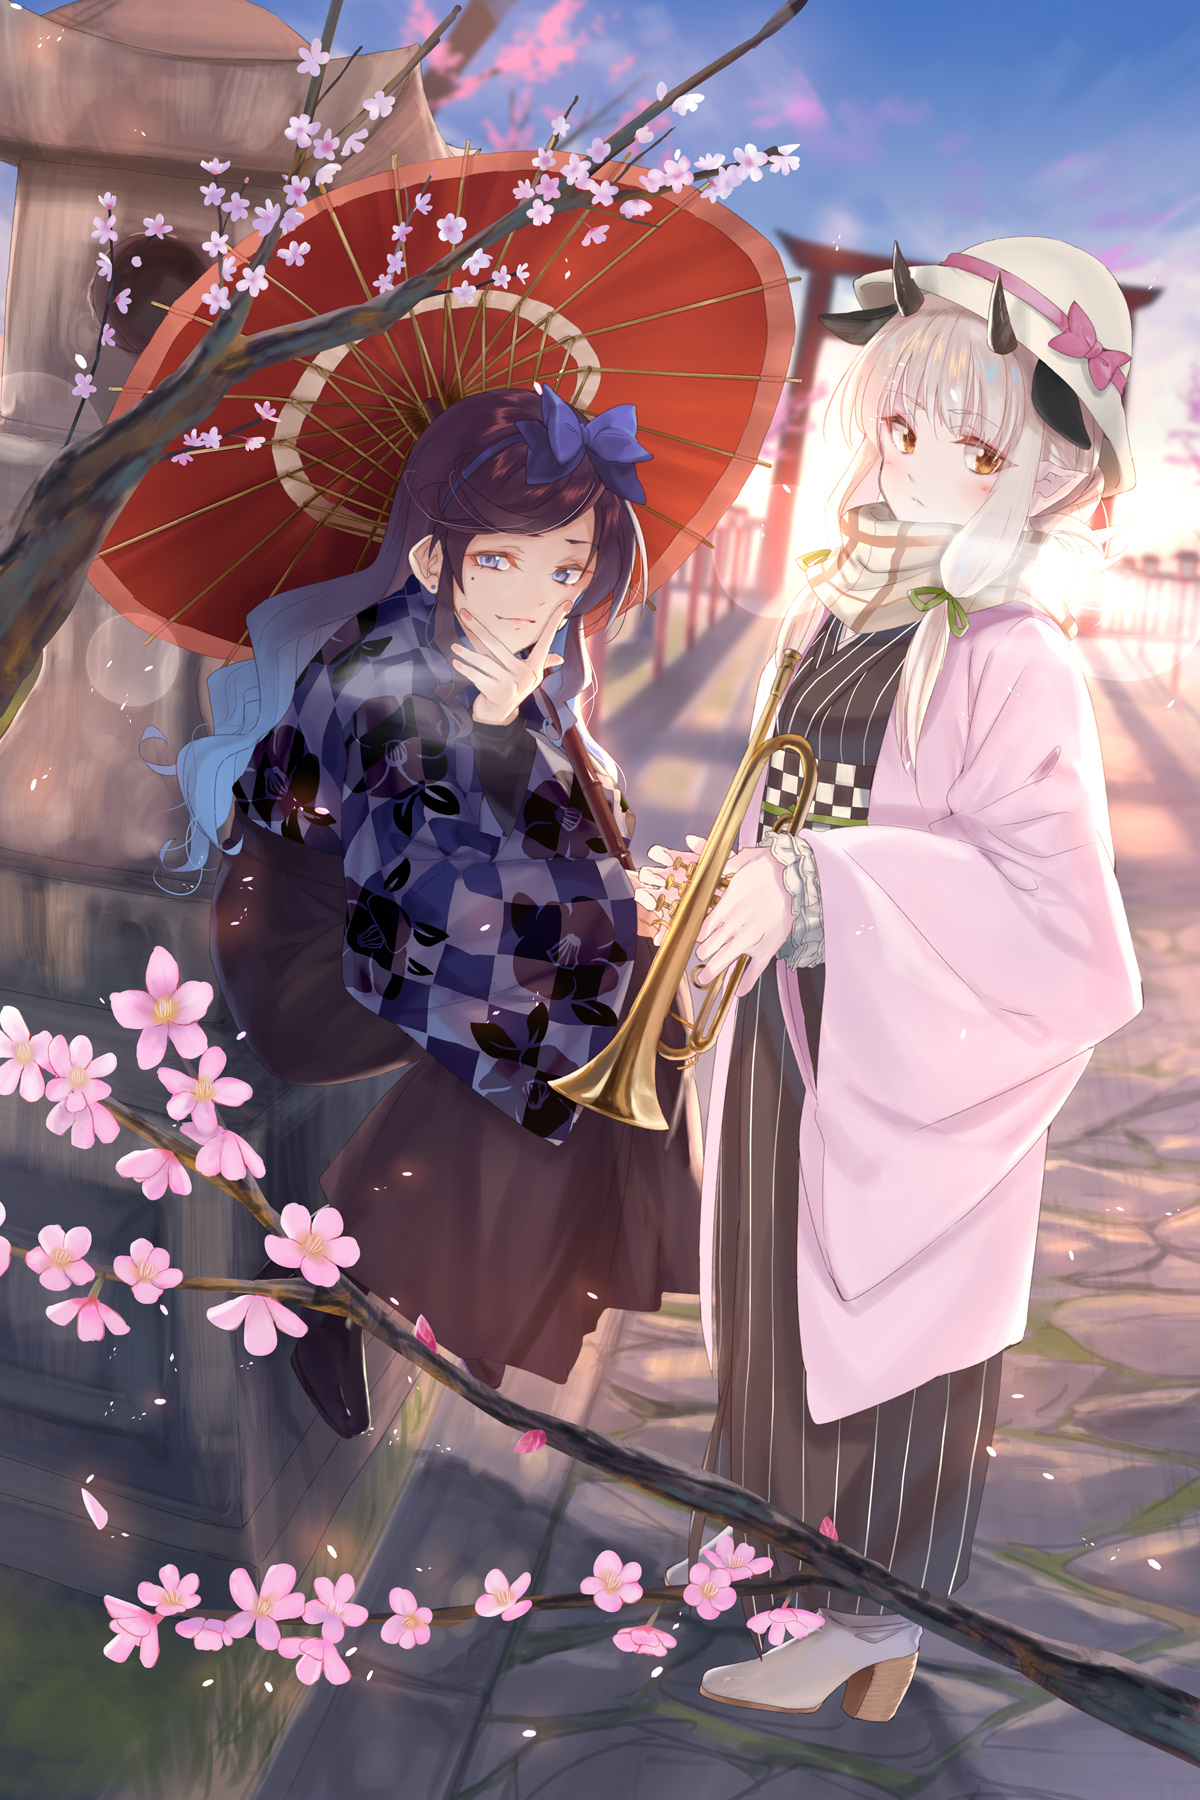 Anime 1200x1800 anime anime girls original characters New Year Plum tree blossoms Kabocha kimono portrait display umbrella horns